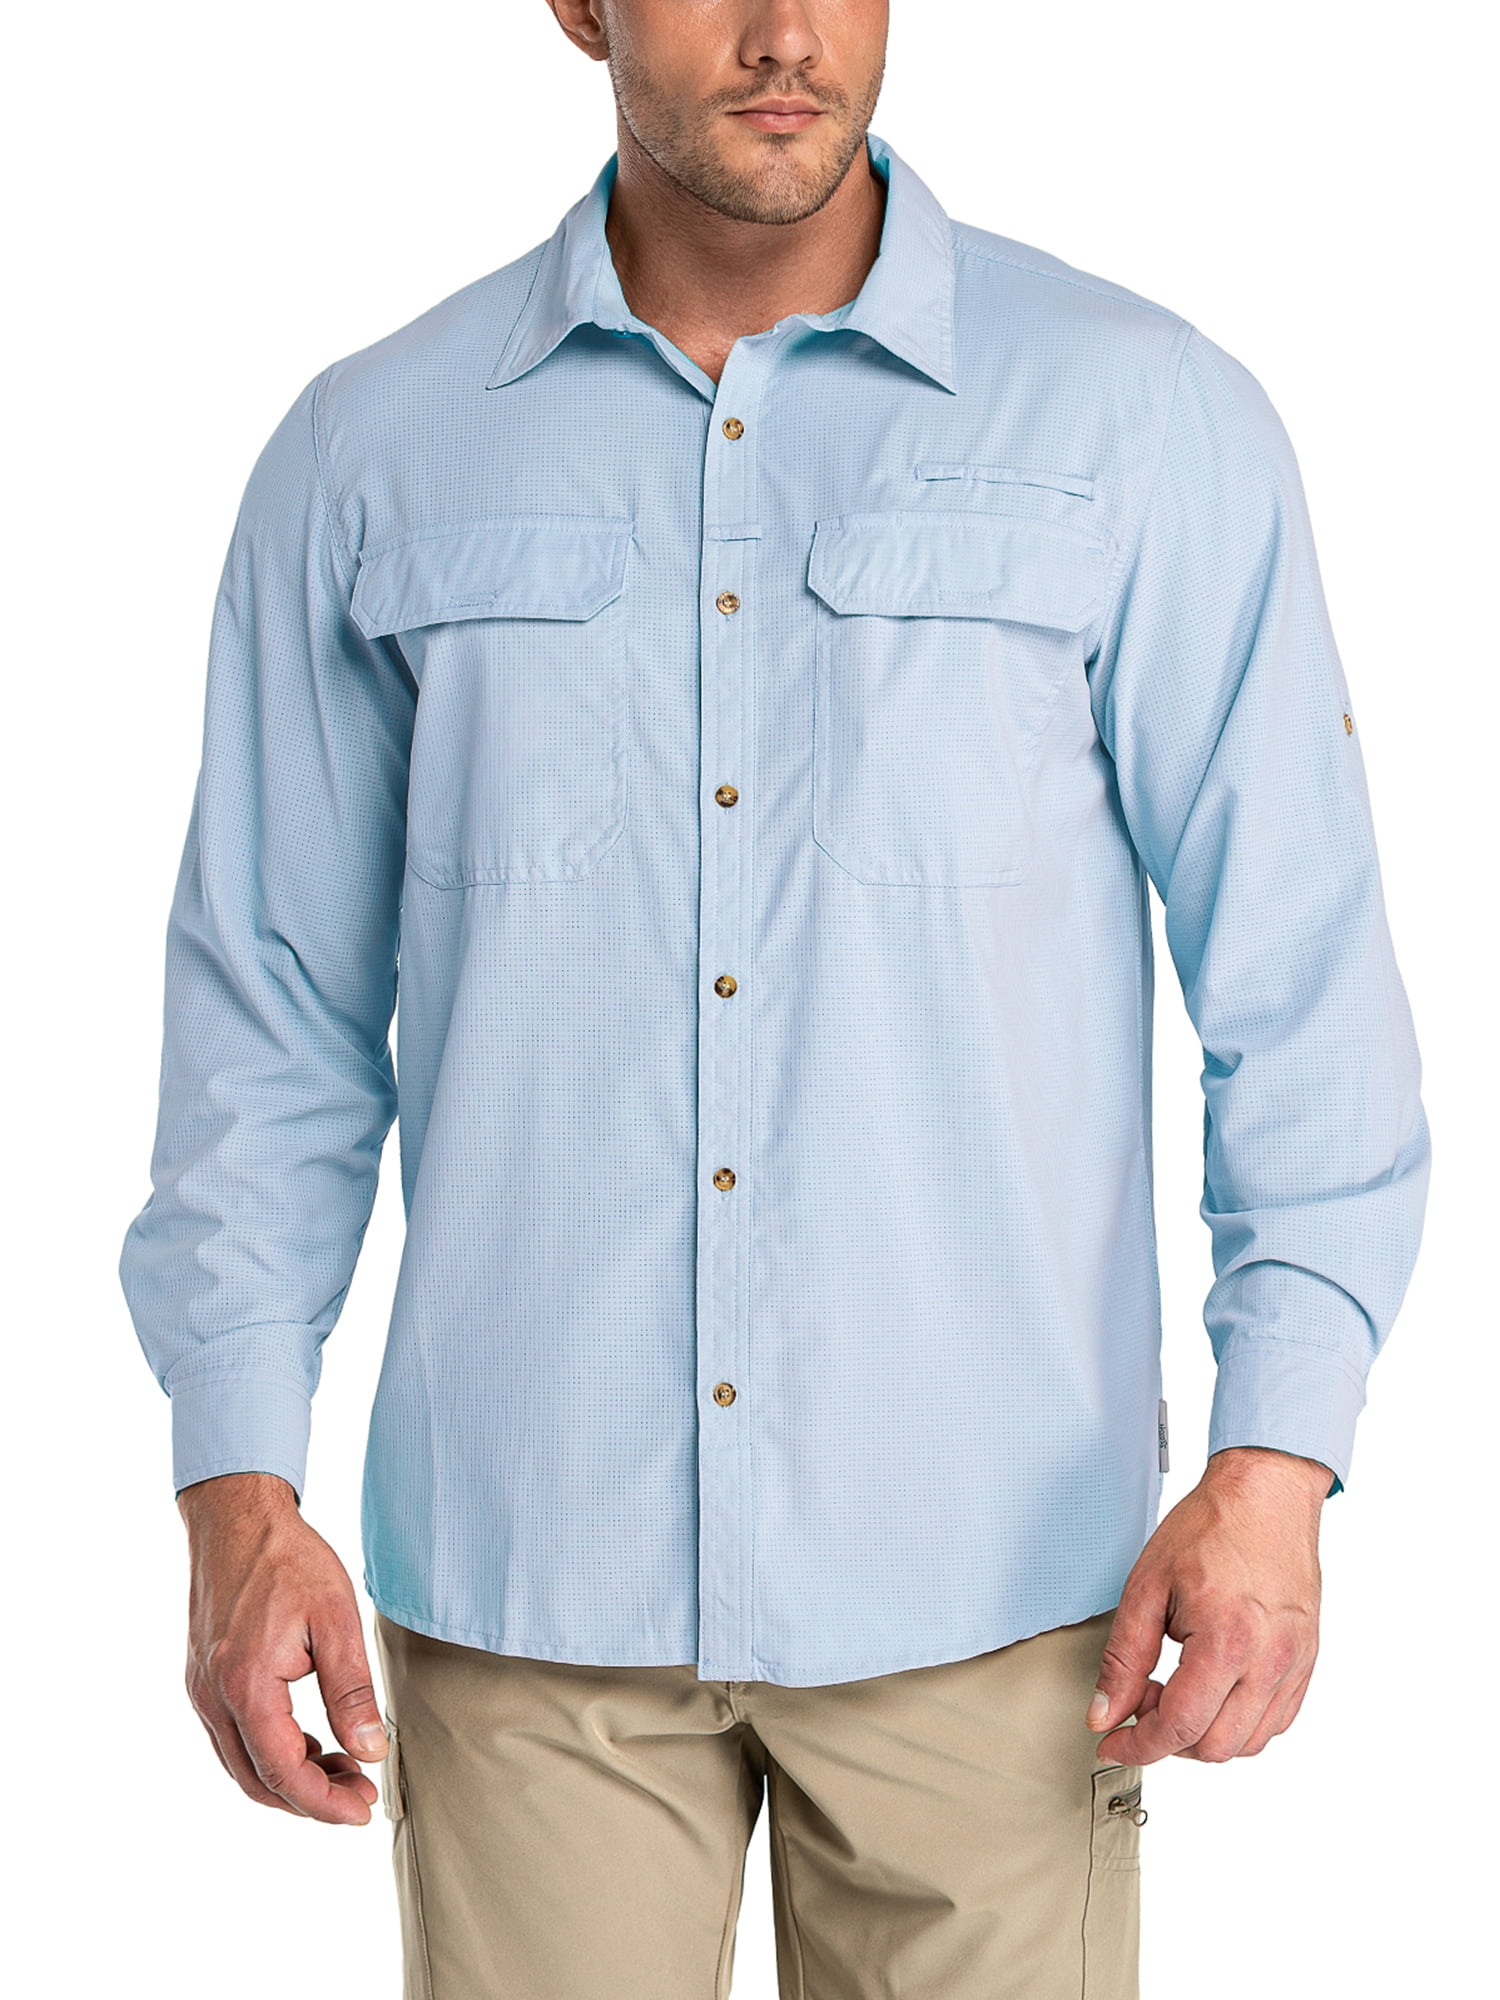 Upf 50+ Quick-Drying Breathable Long Sleeve Fishing Shirts Custom